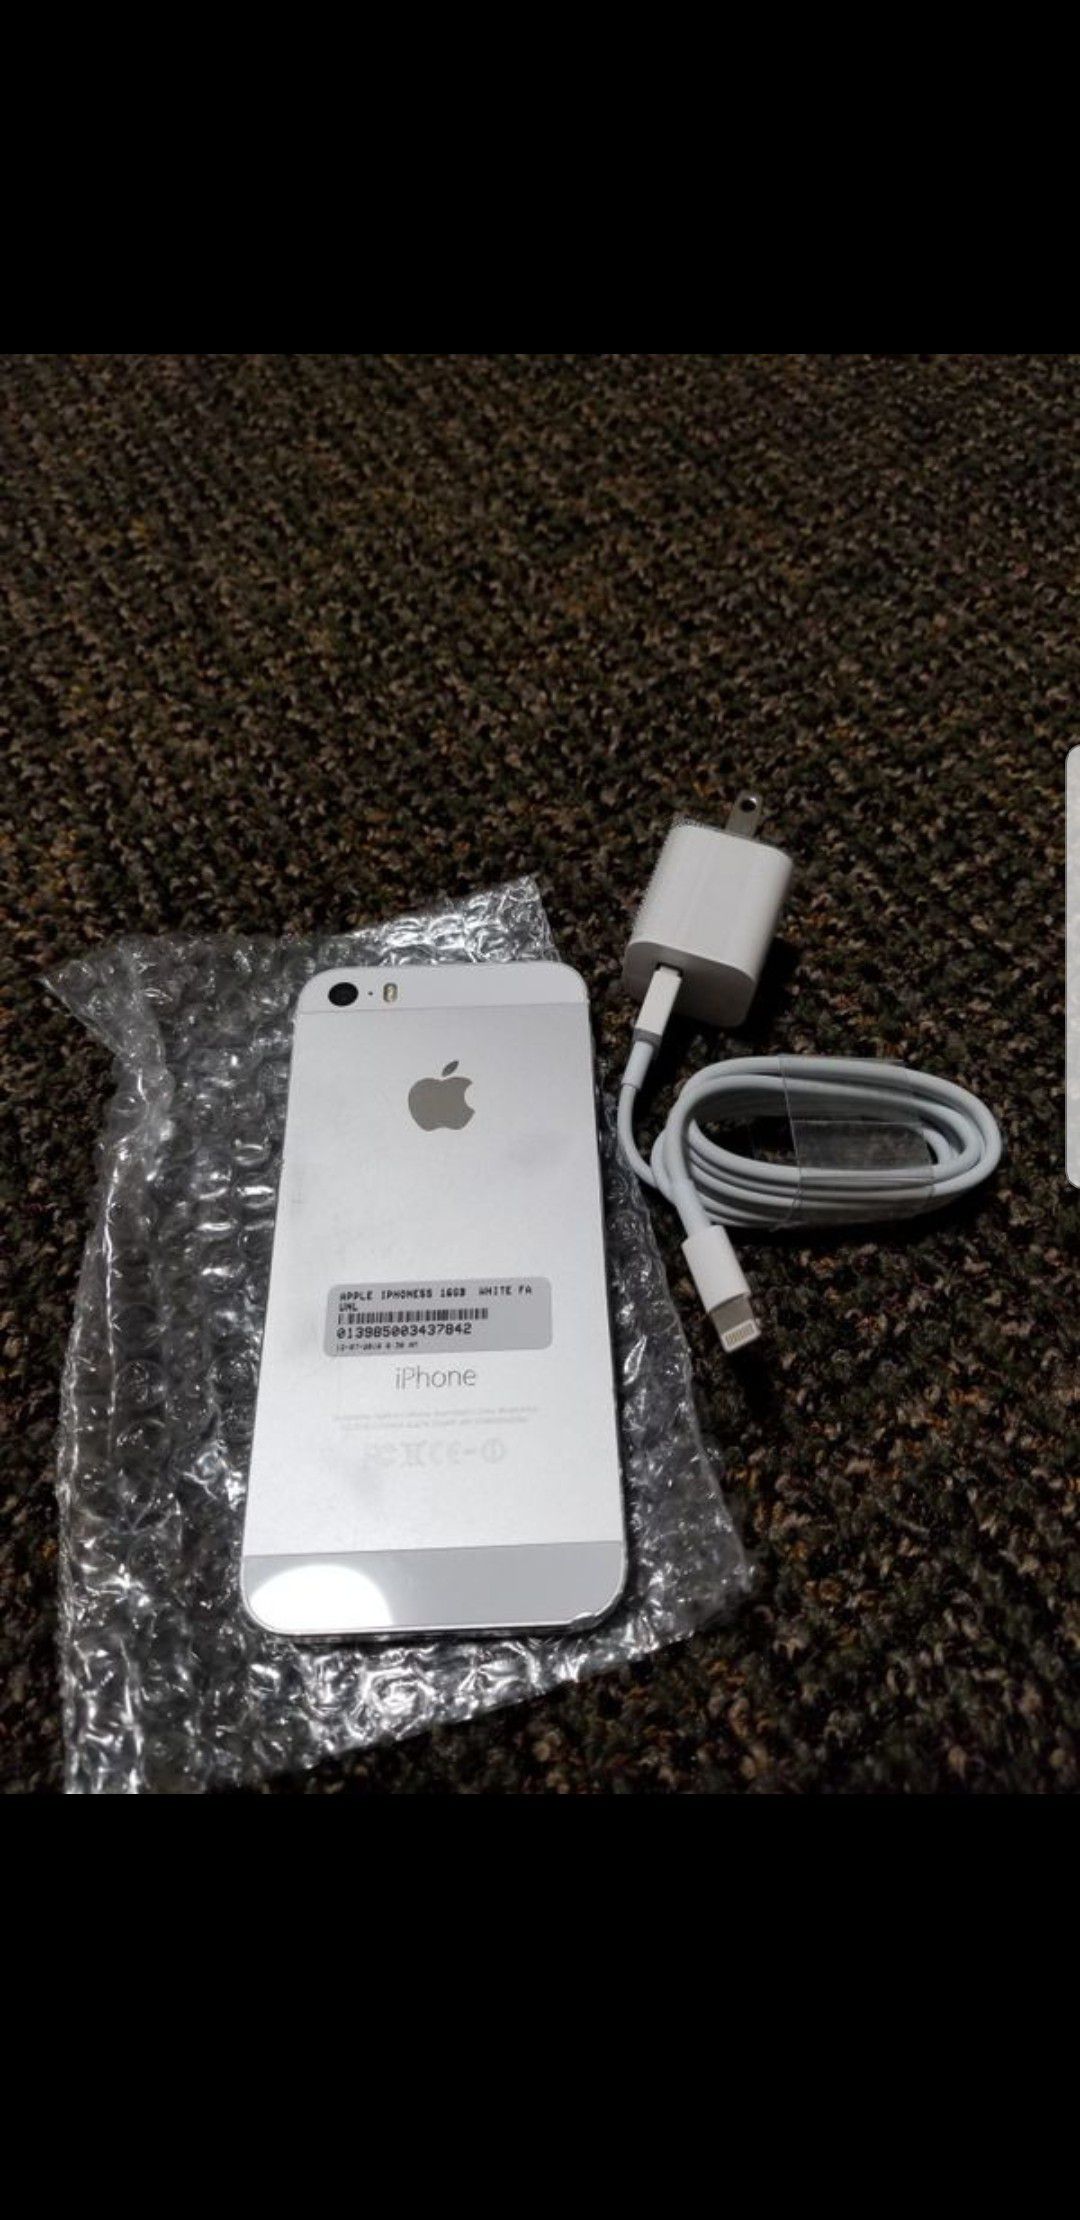 iphone 5s, factory unlocked